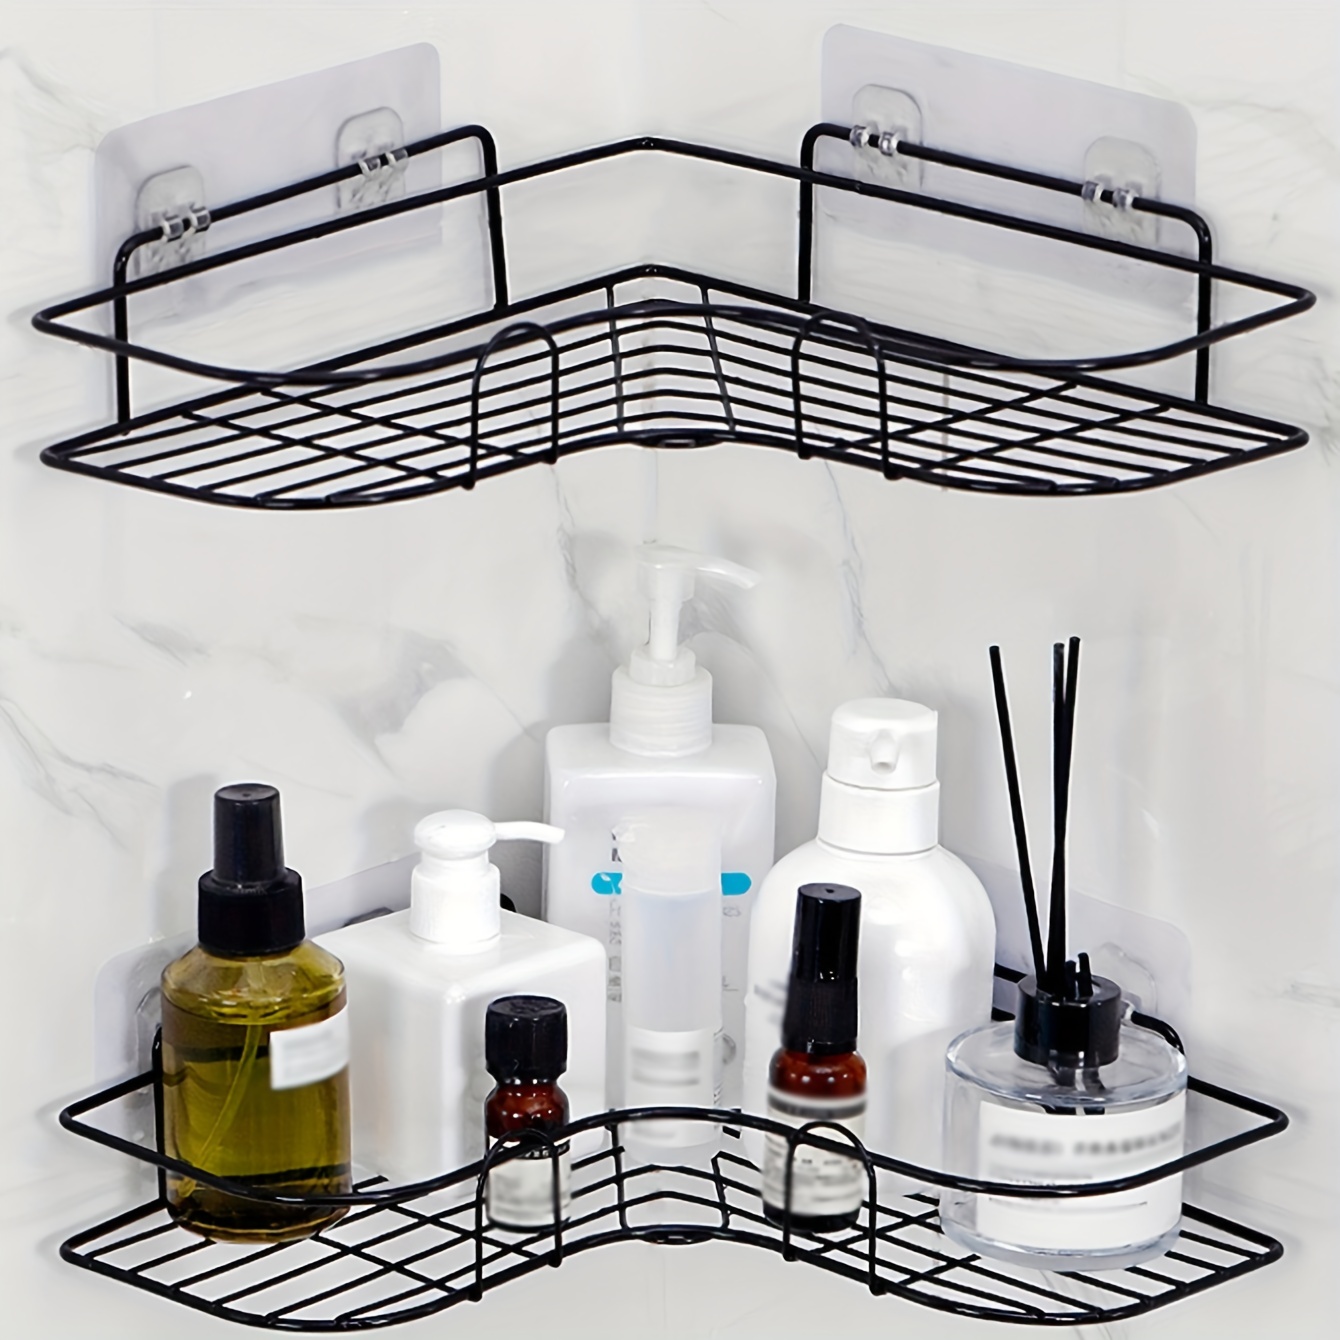 Multi Functional Bathroom Organizer: Shower, Shampoo Stand, Towel & Toilet  Shelf, Wall Mounted Spice Shelf & Corner Stand 230625 From Ren09, $21.11